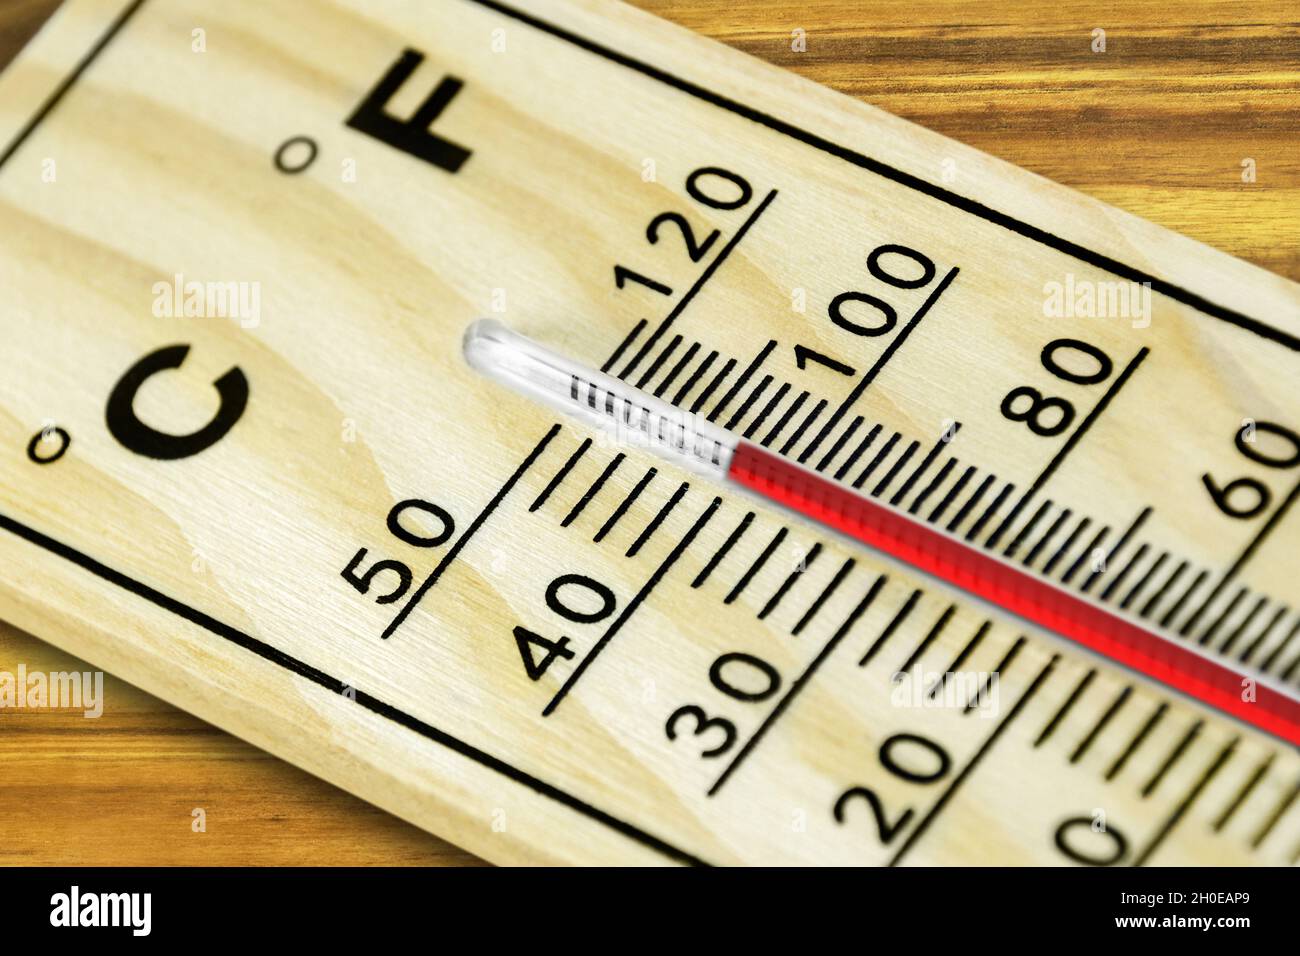 Thermometer 100 Banque d'image et photos - Alamy